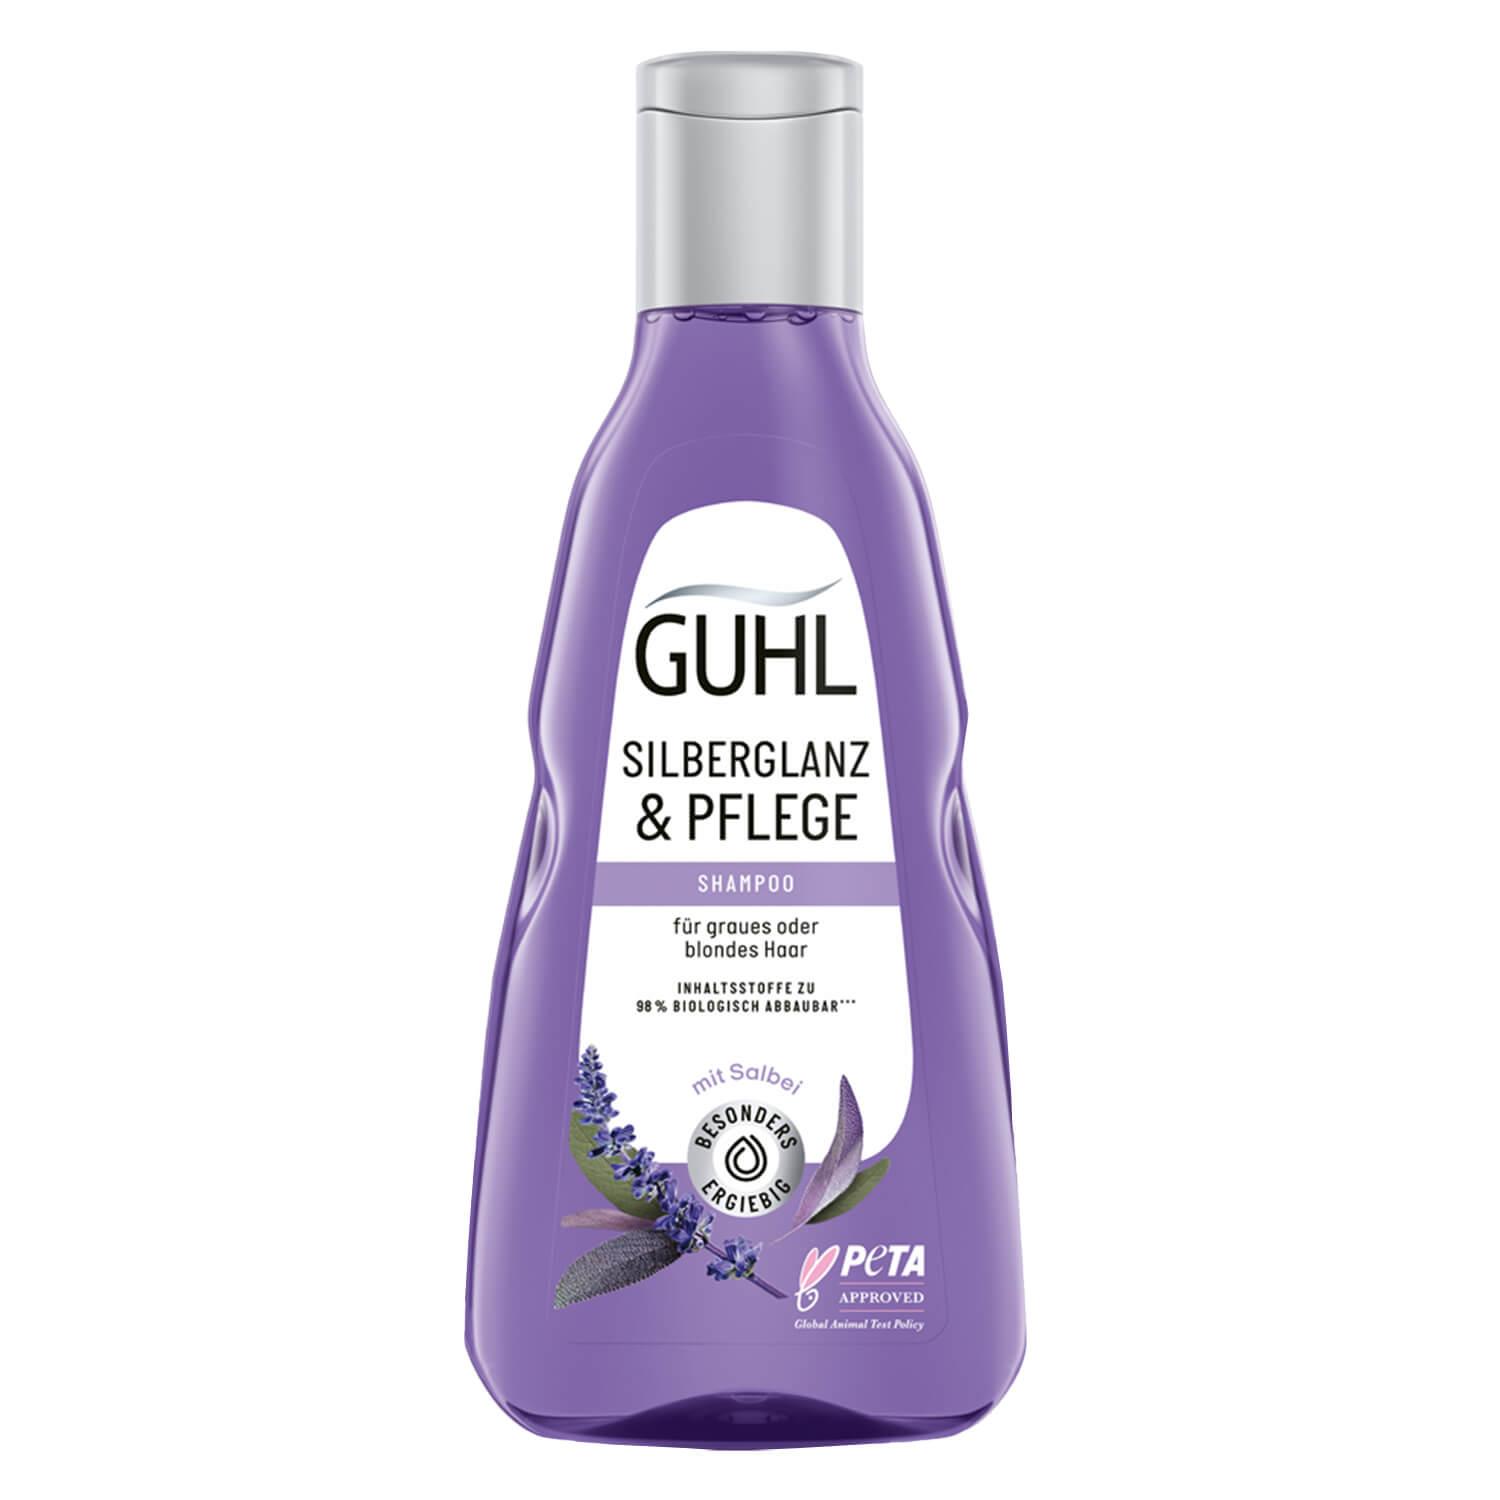 GUHL - SILBERGLANZ & PFLEGE Shampoo